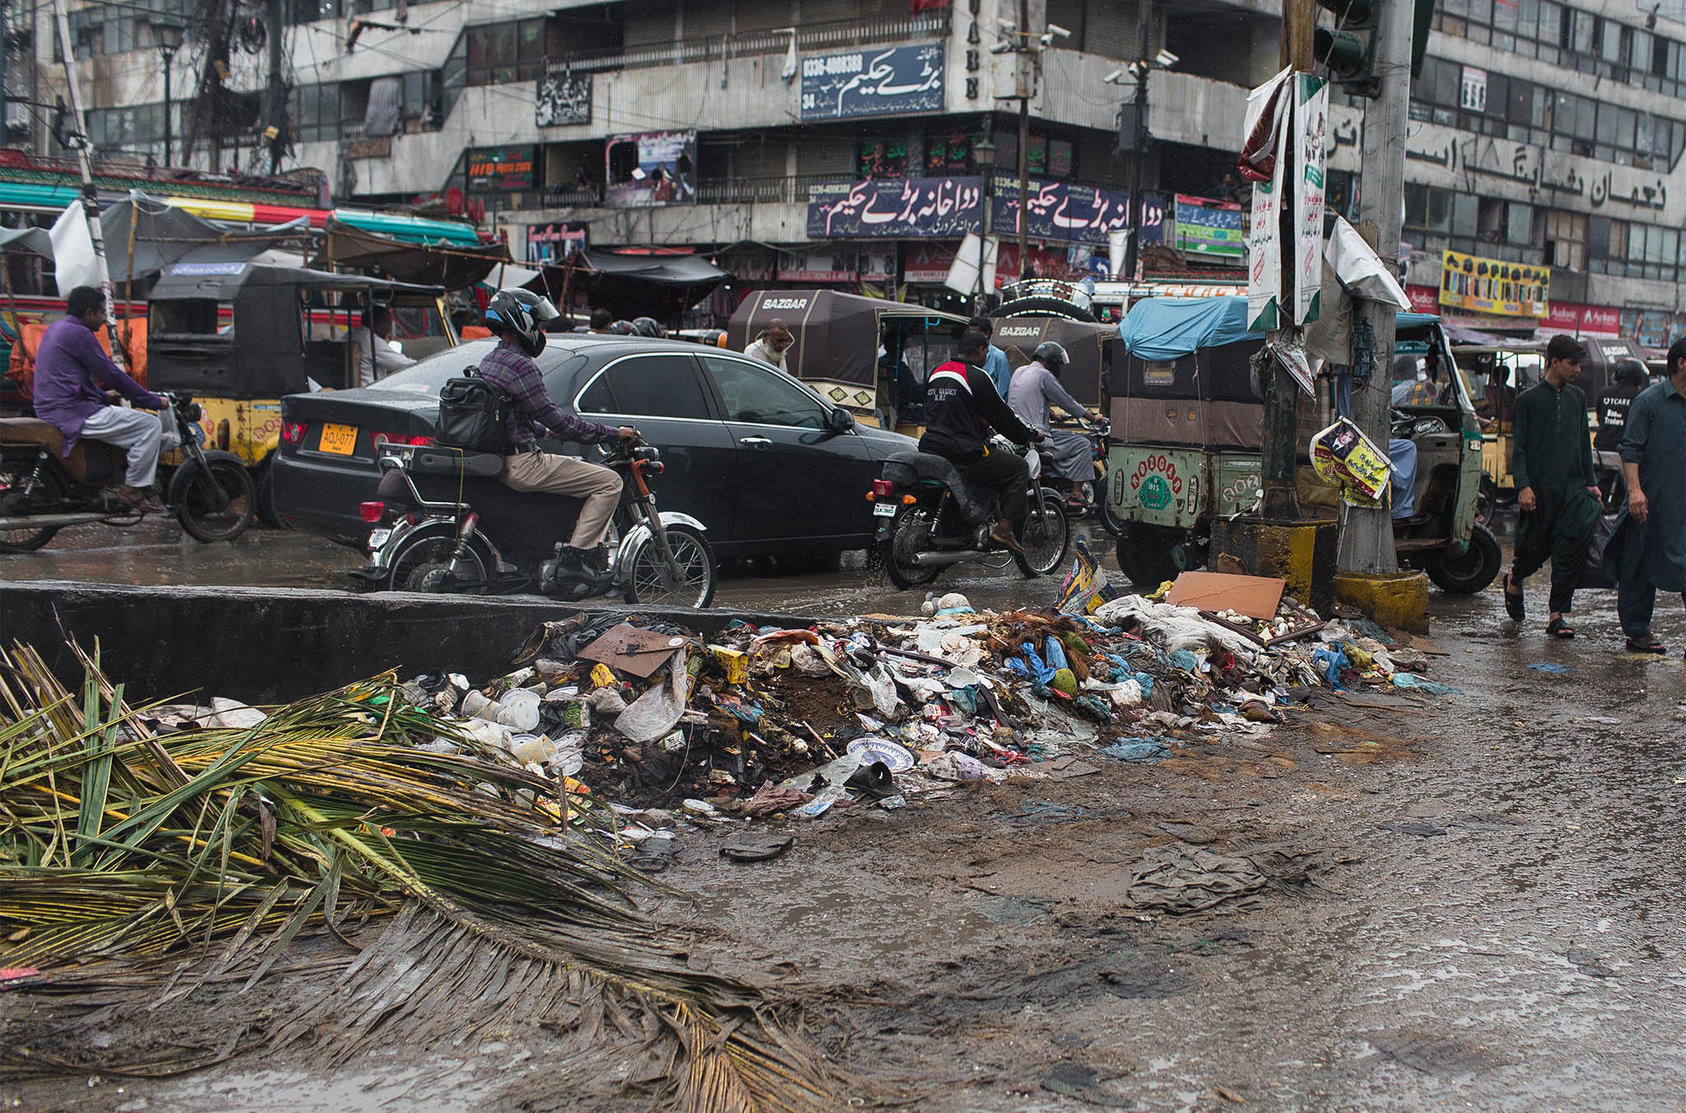 A mound of trash along a street in Karachi, Pakistan after heavy rainfall. Aug. 28, 2019.  (Mustafa Hussain/The New York Times)